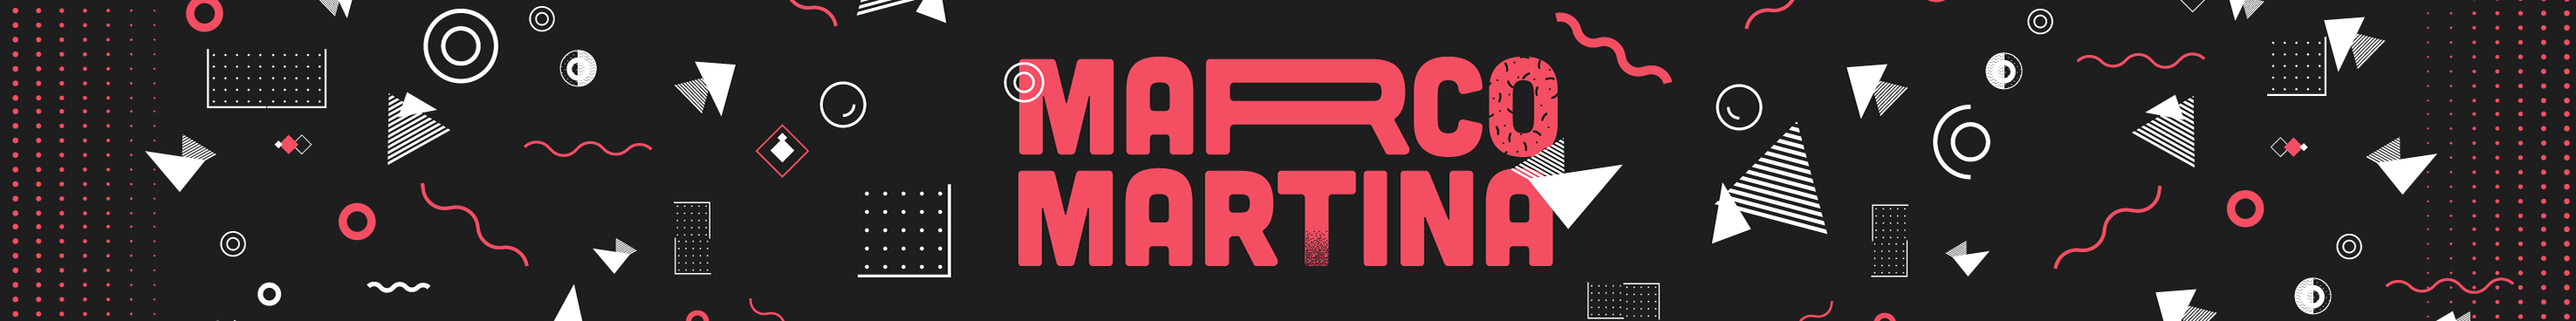 Marco Martina's profile banner